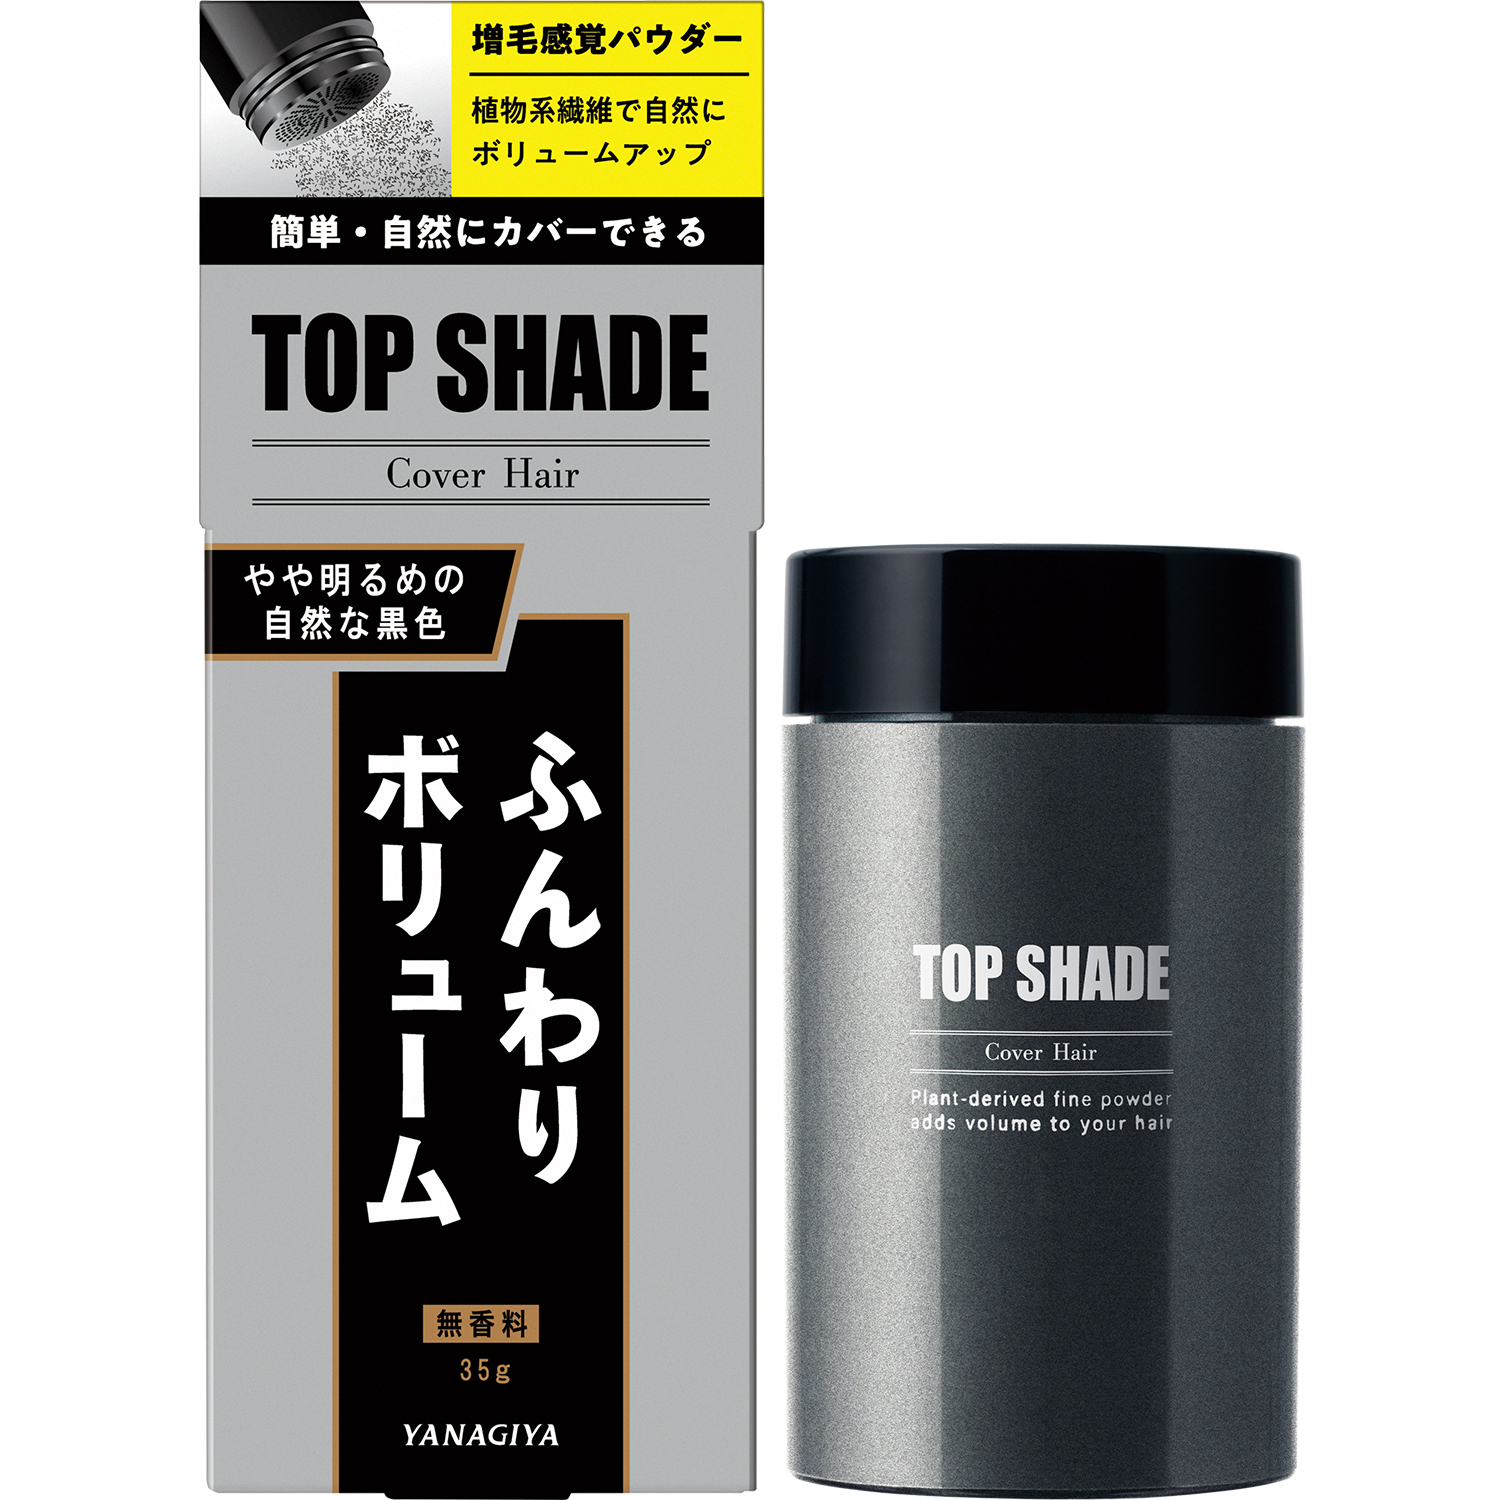 Top Shade Cover Hair <Slightly Bright Natural  Black>